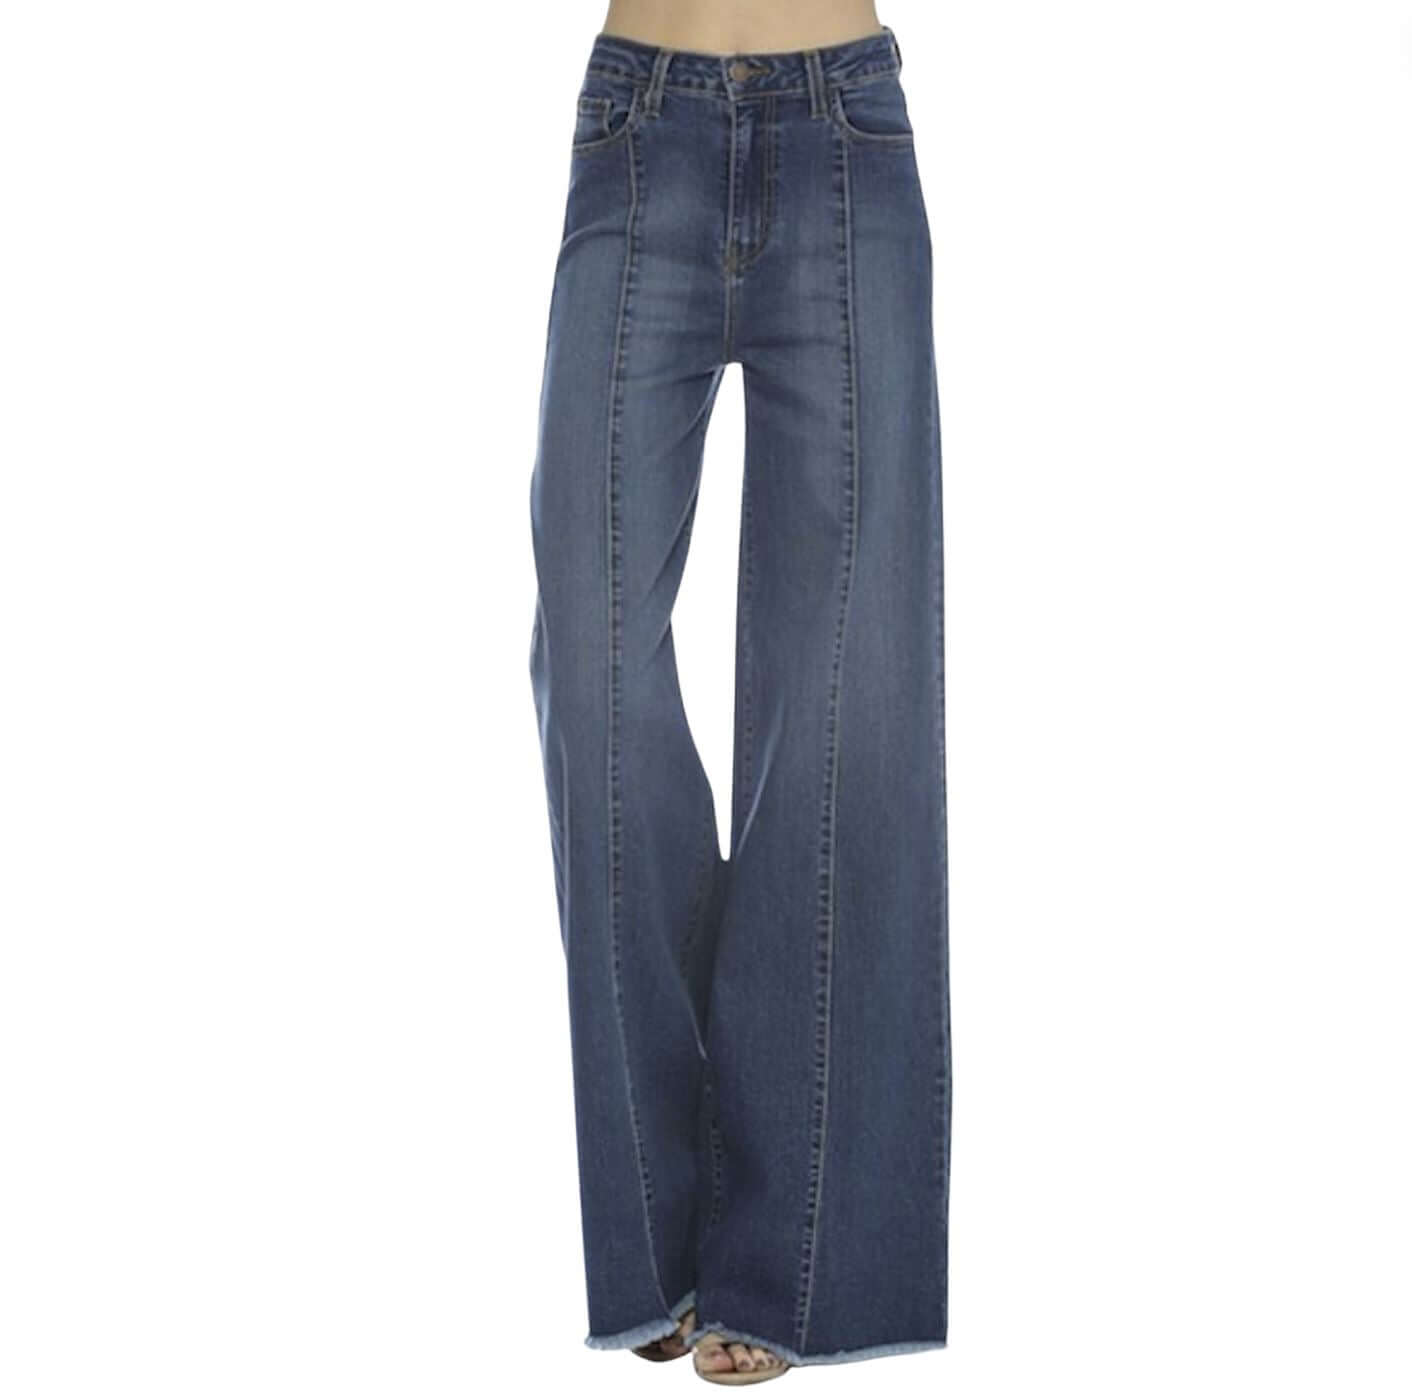 Women's Jeans | Shop Ladies Denim Jeans | Very Ireland